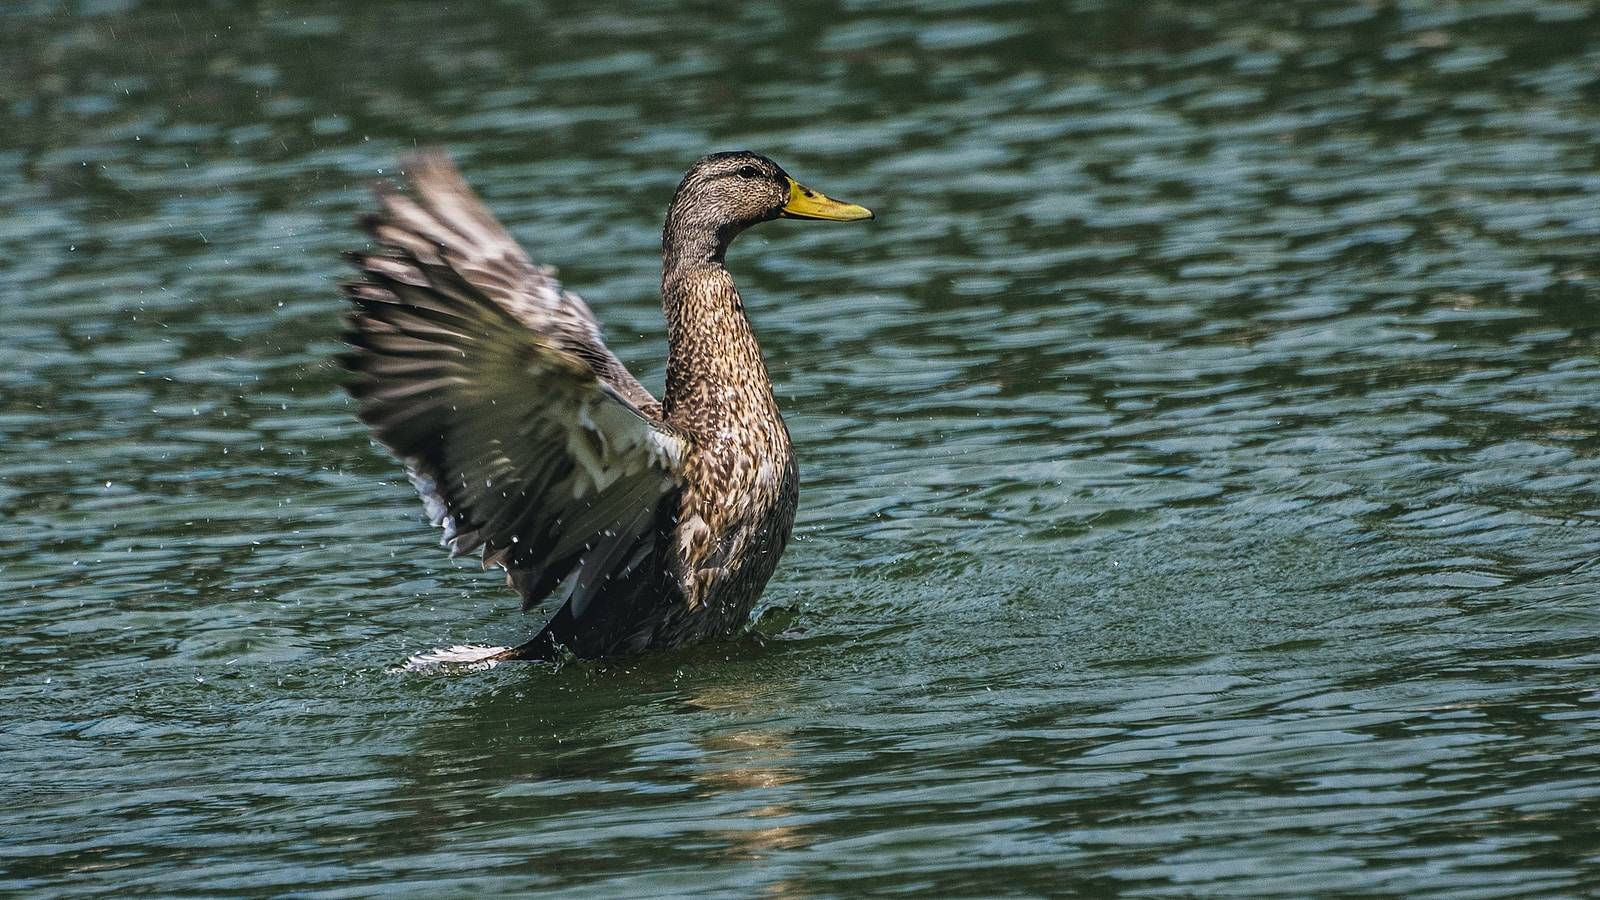 brown mallard duck on body of water at daytime